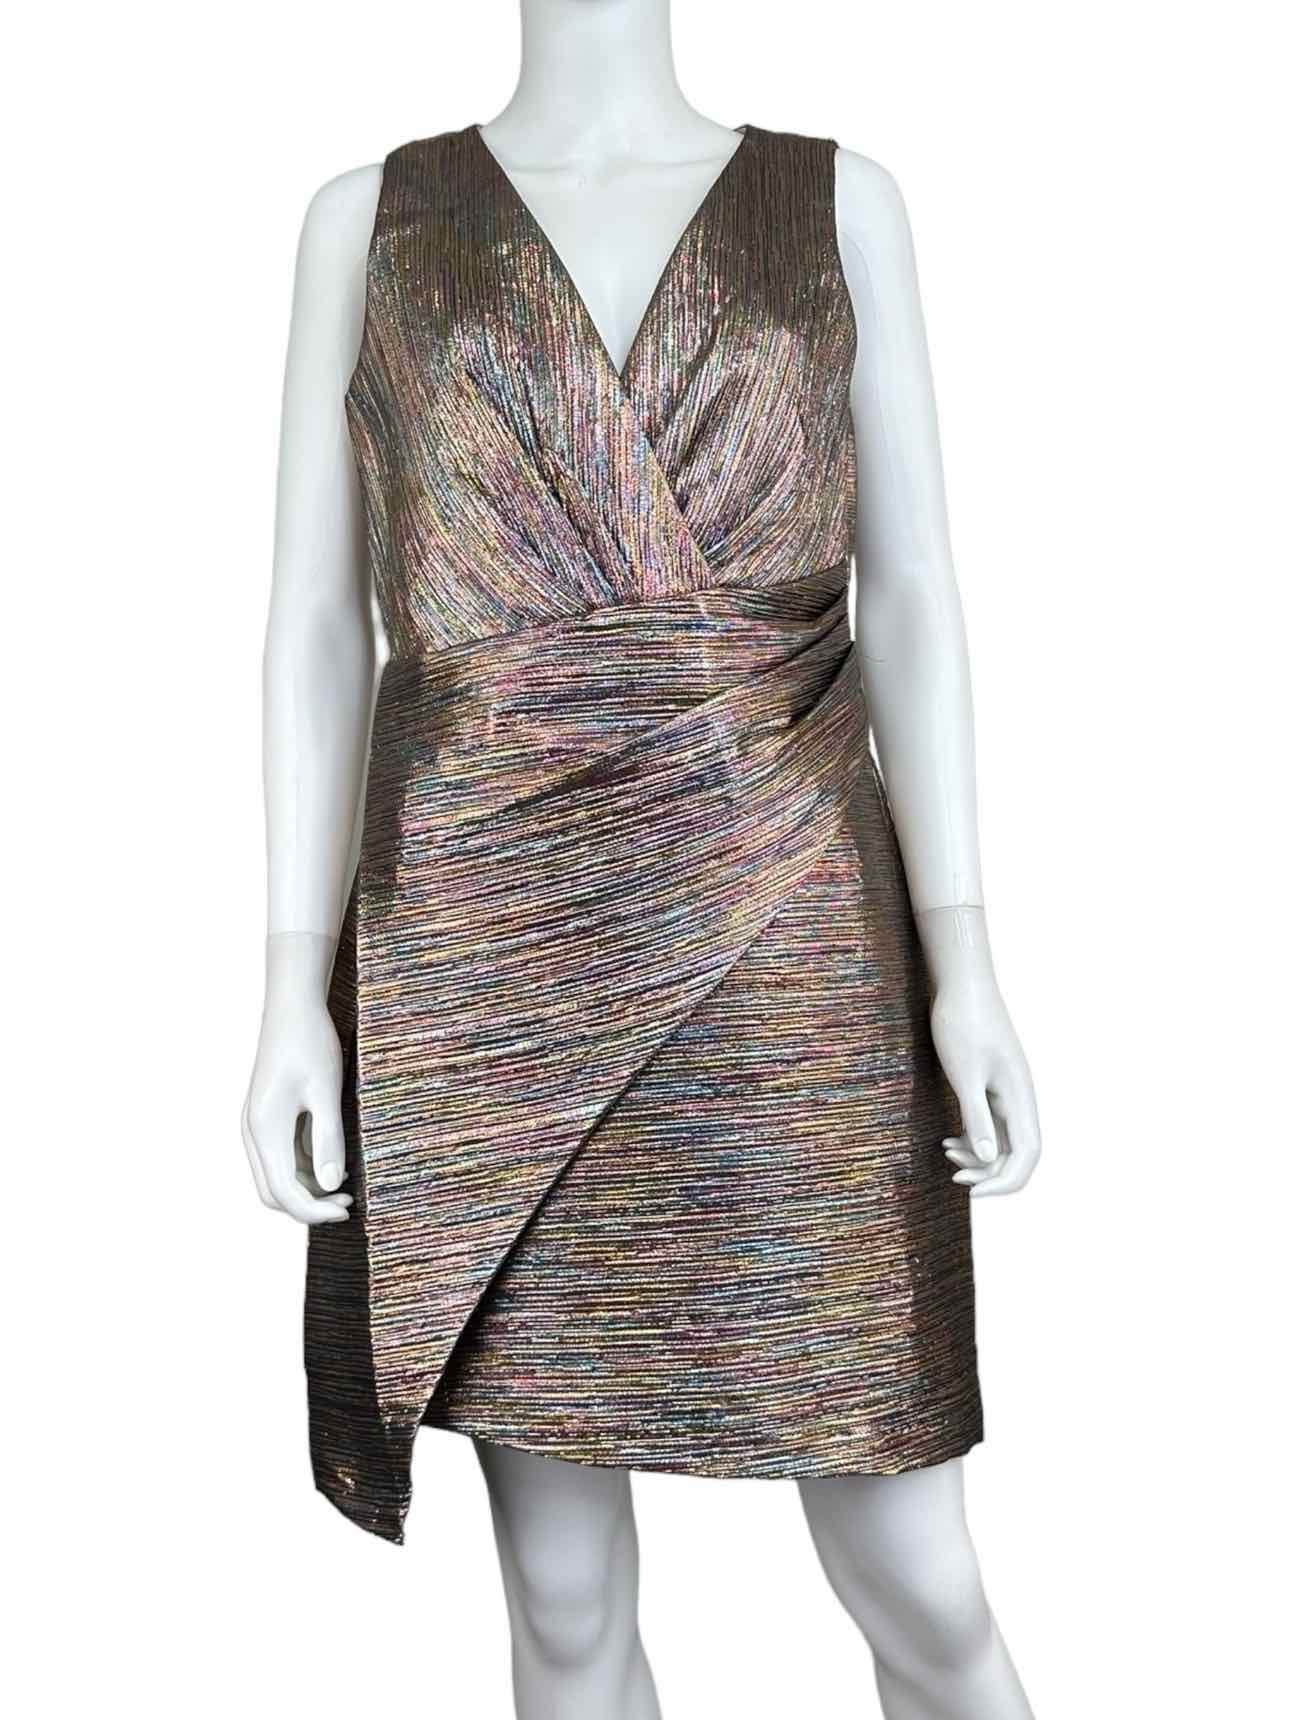 GIANNI BINI NWT Metallic Cocktail Dress Size L